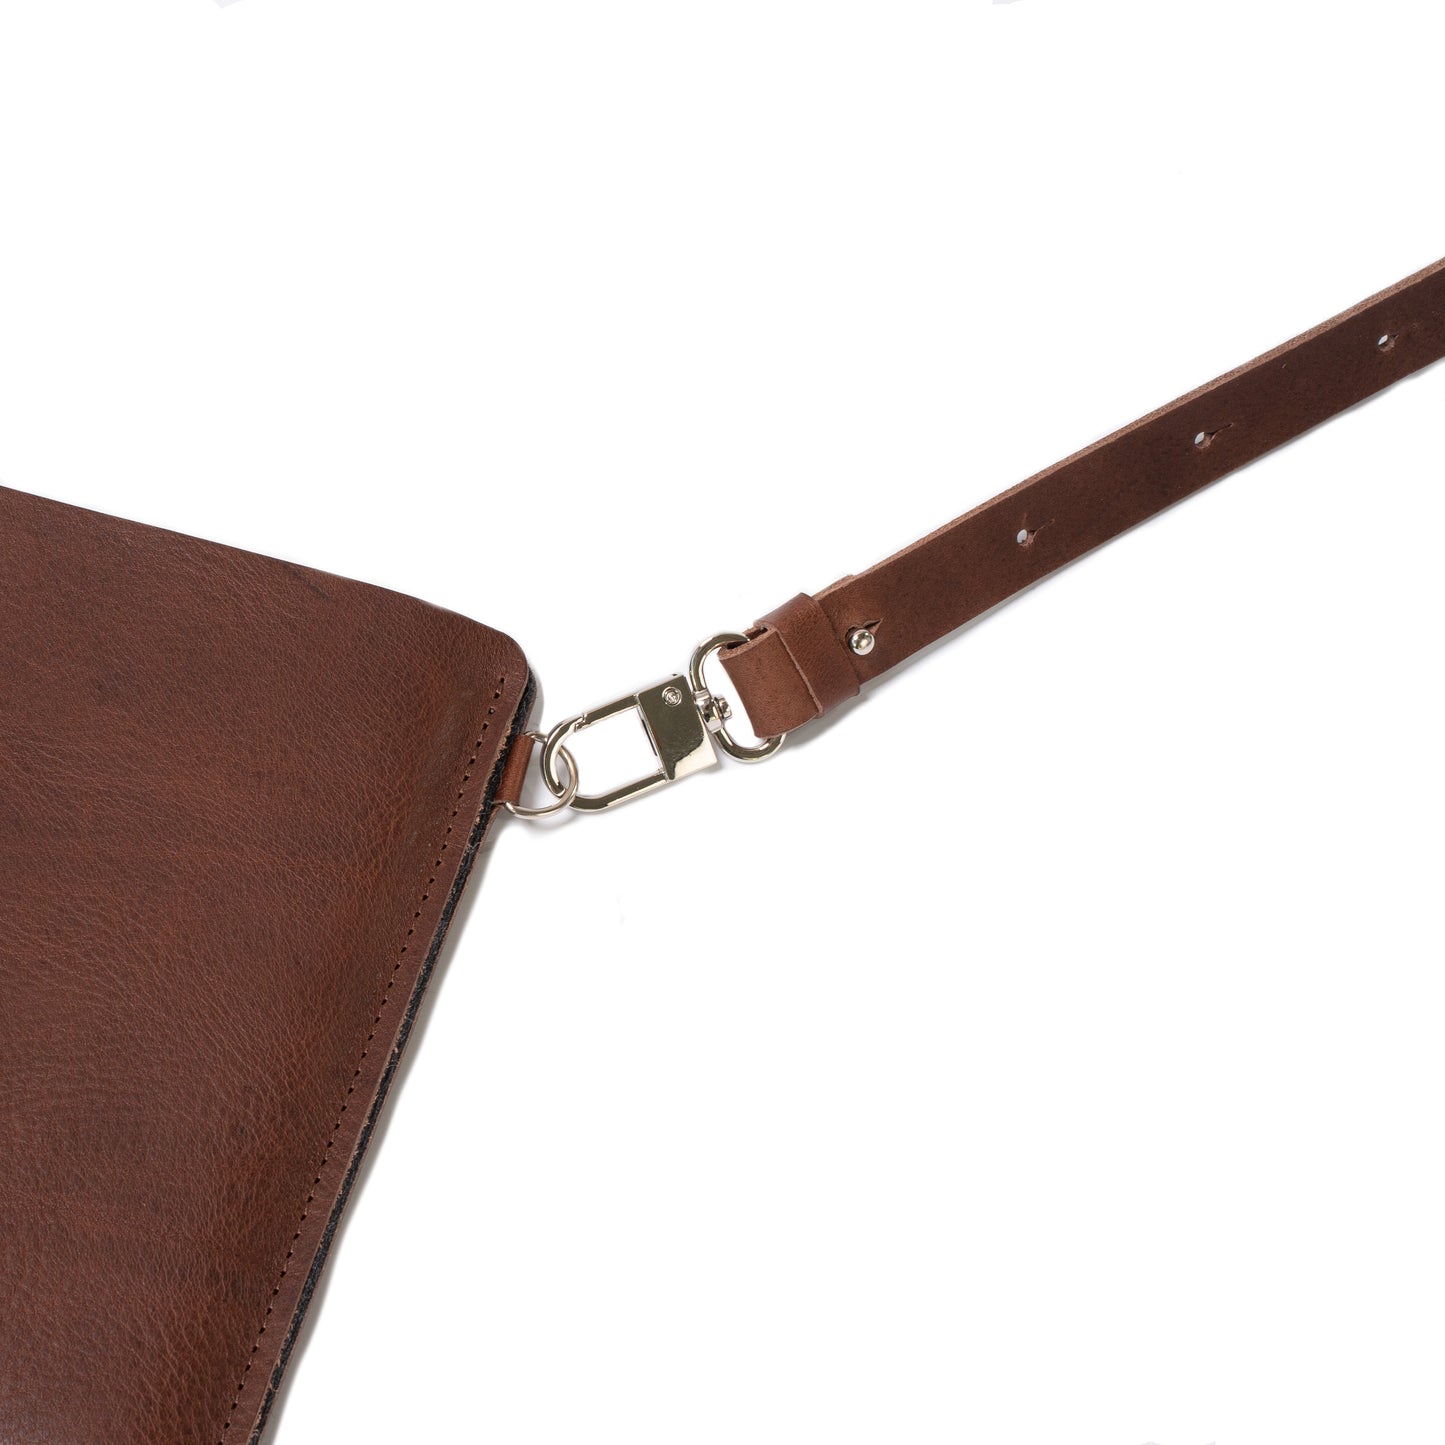 Leather Bag for iPad - The Minimalist 4.0-5